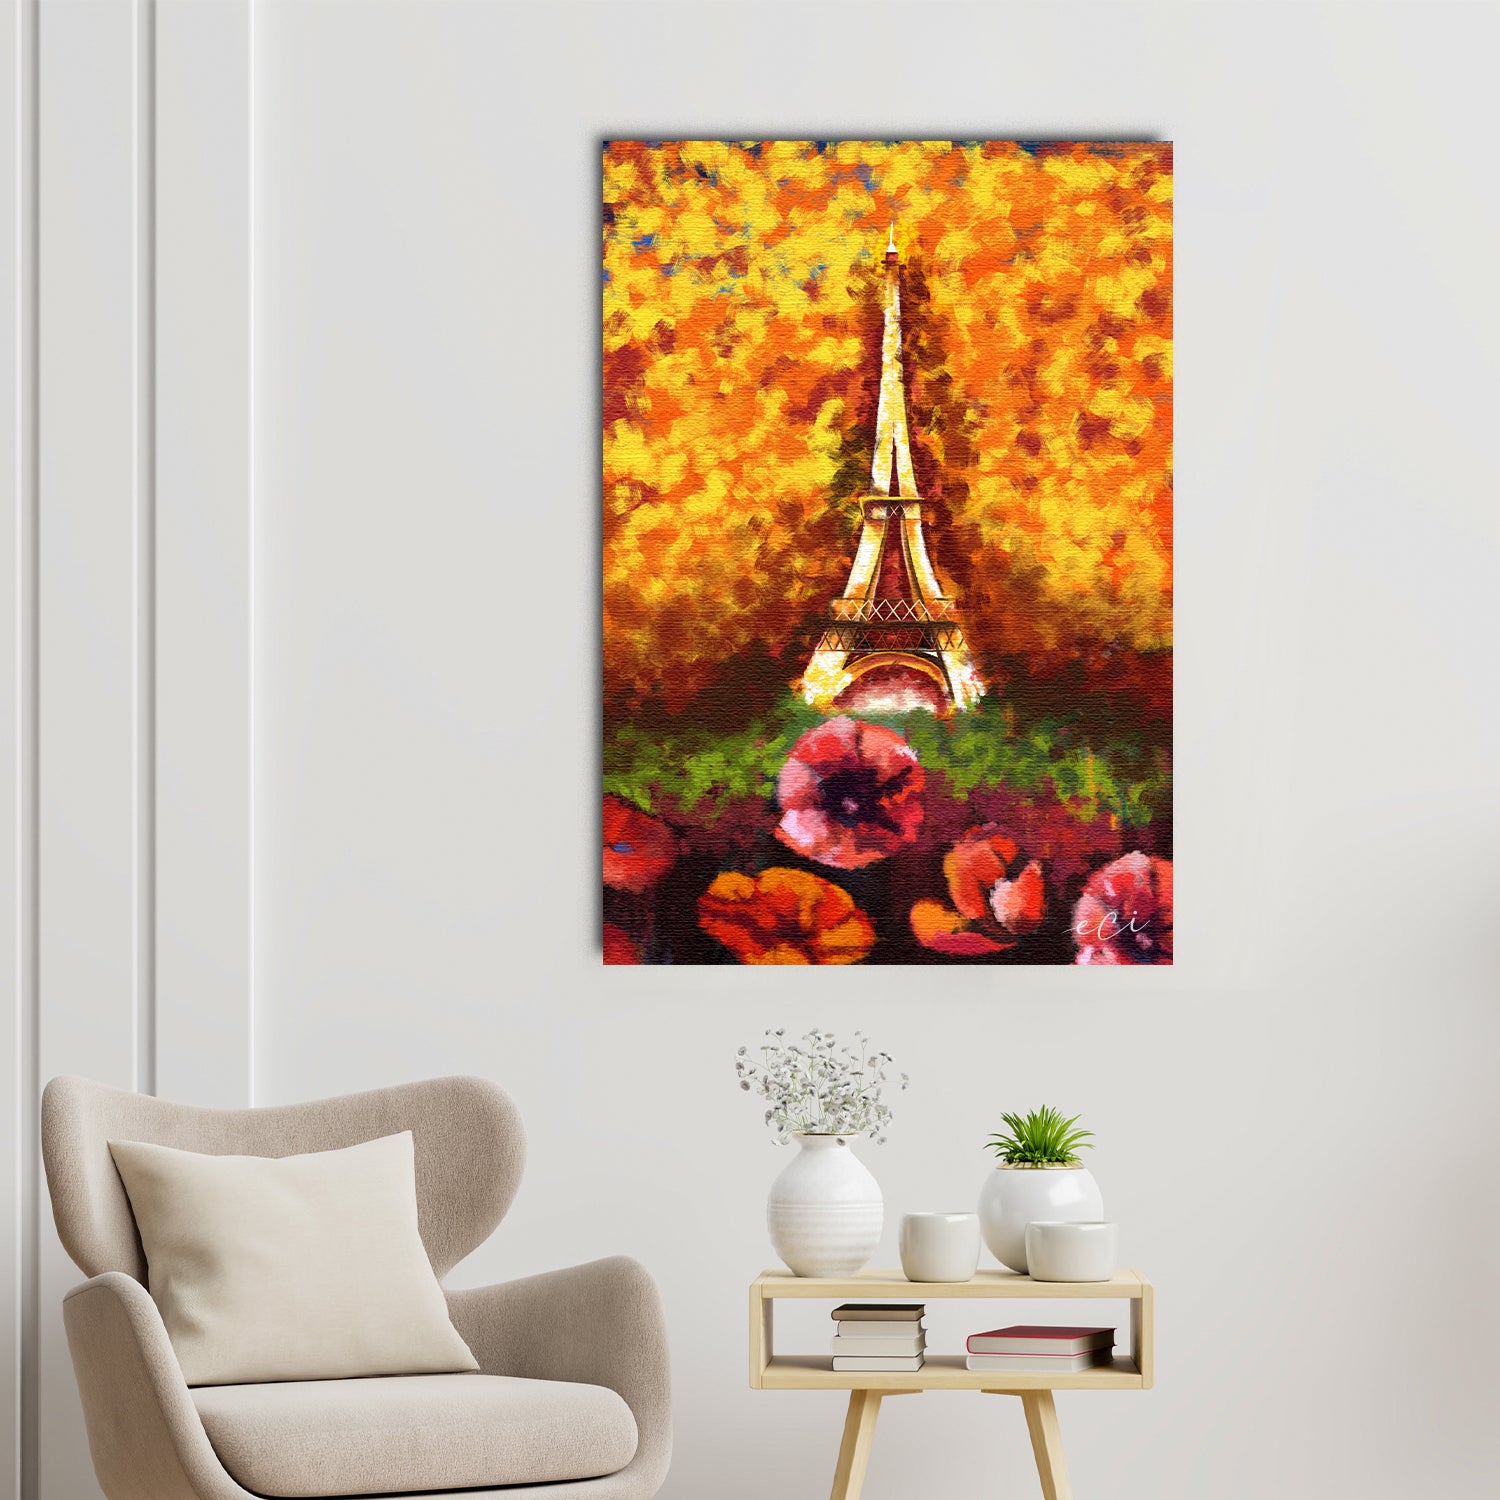 Paris Eiffel Tower View In Autumn Season Digital Printed Canvas Wall Painting